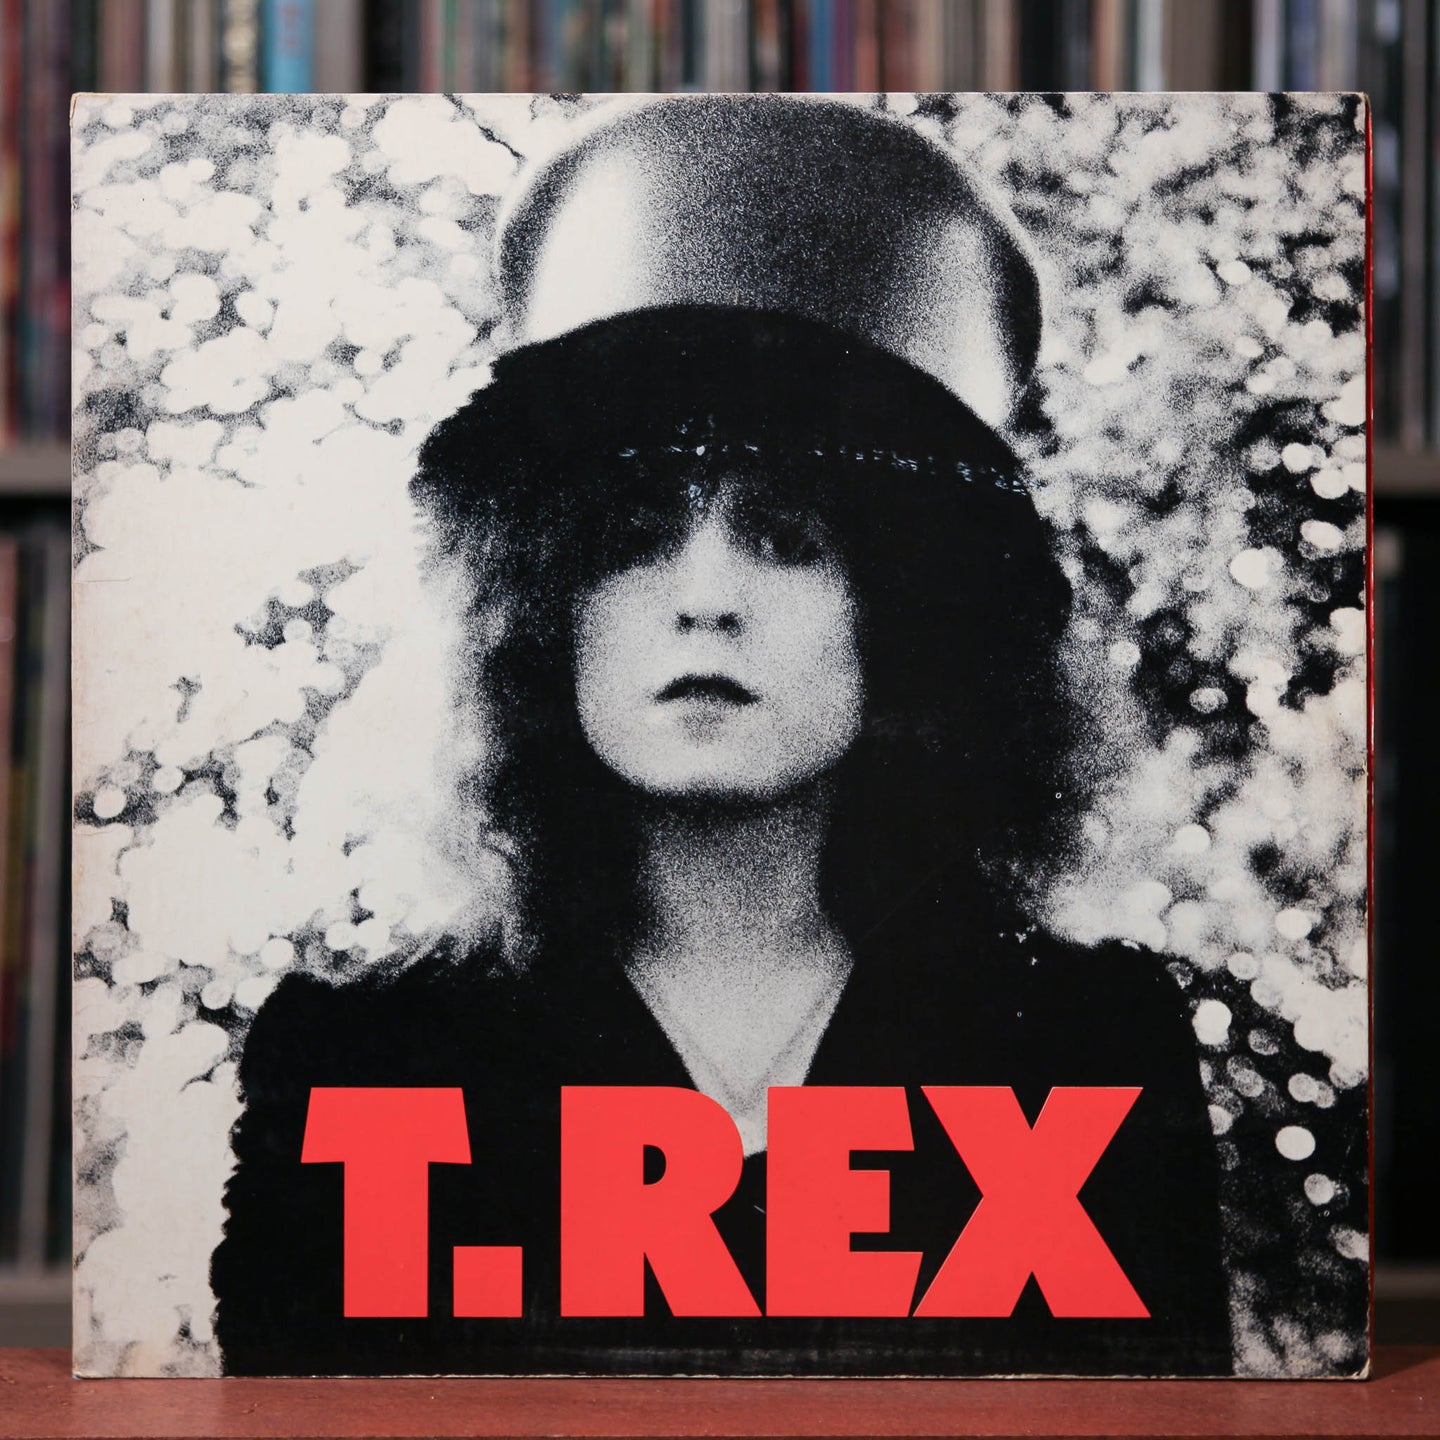 T. Rex - The Slider - 1970's Reprise, VG+/VG